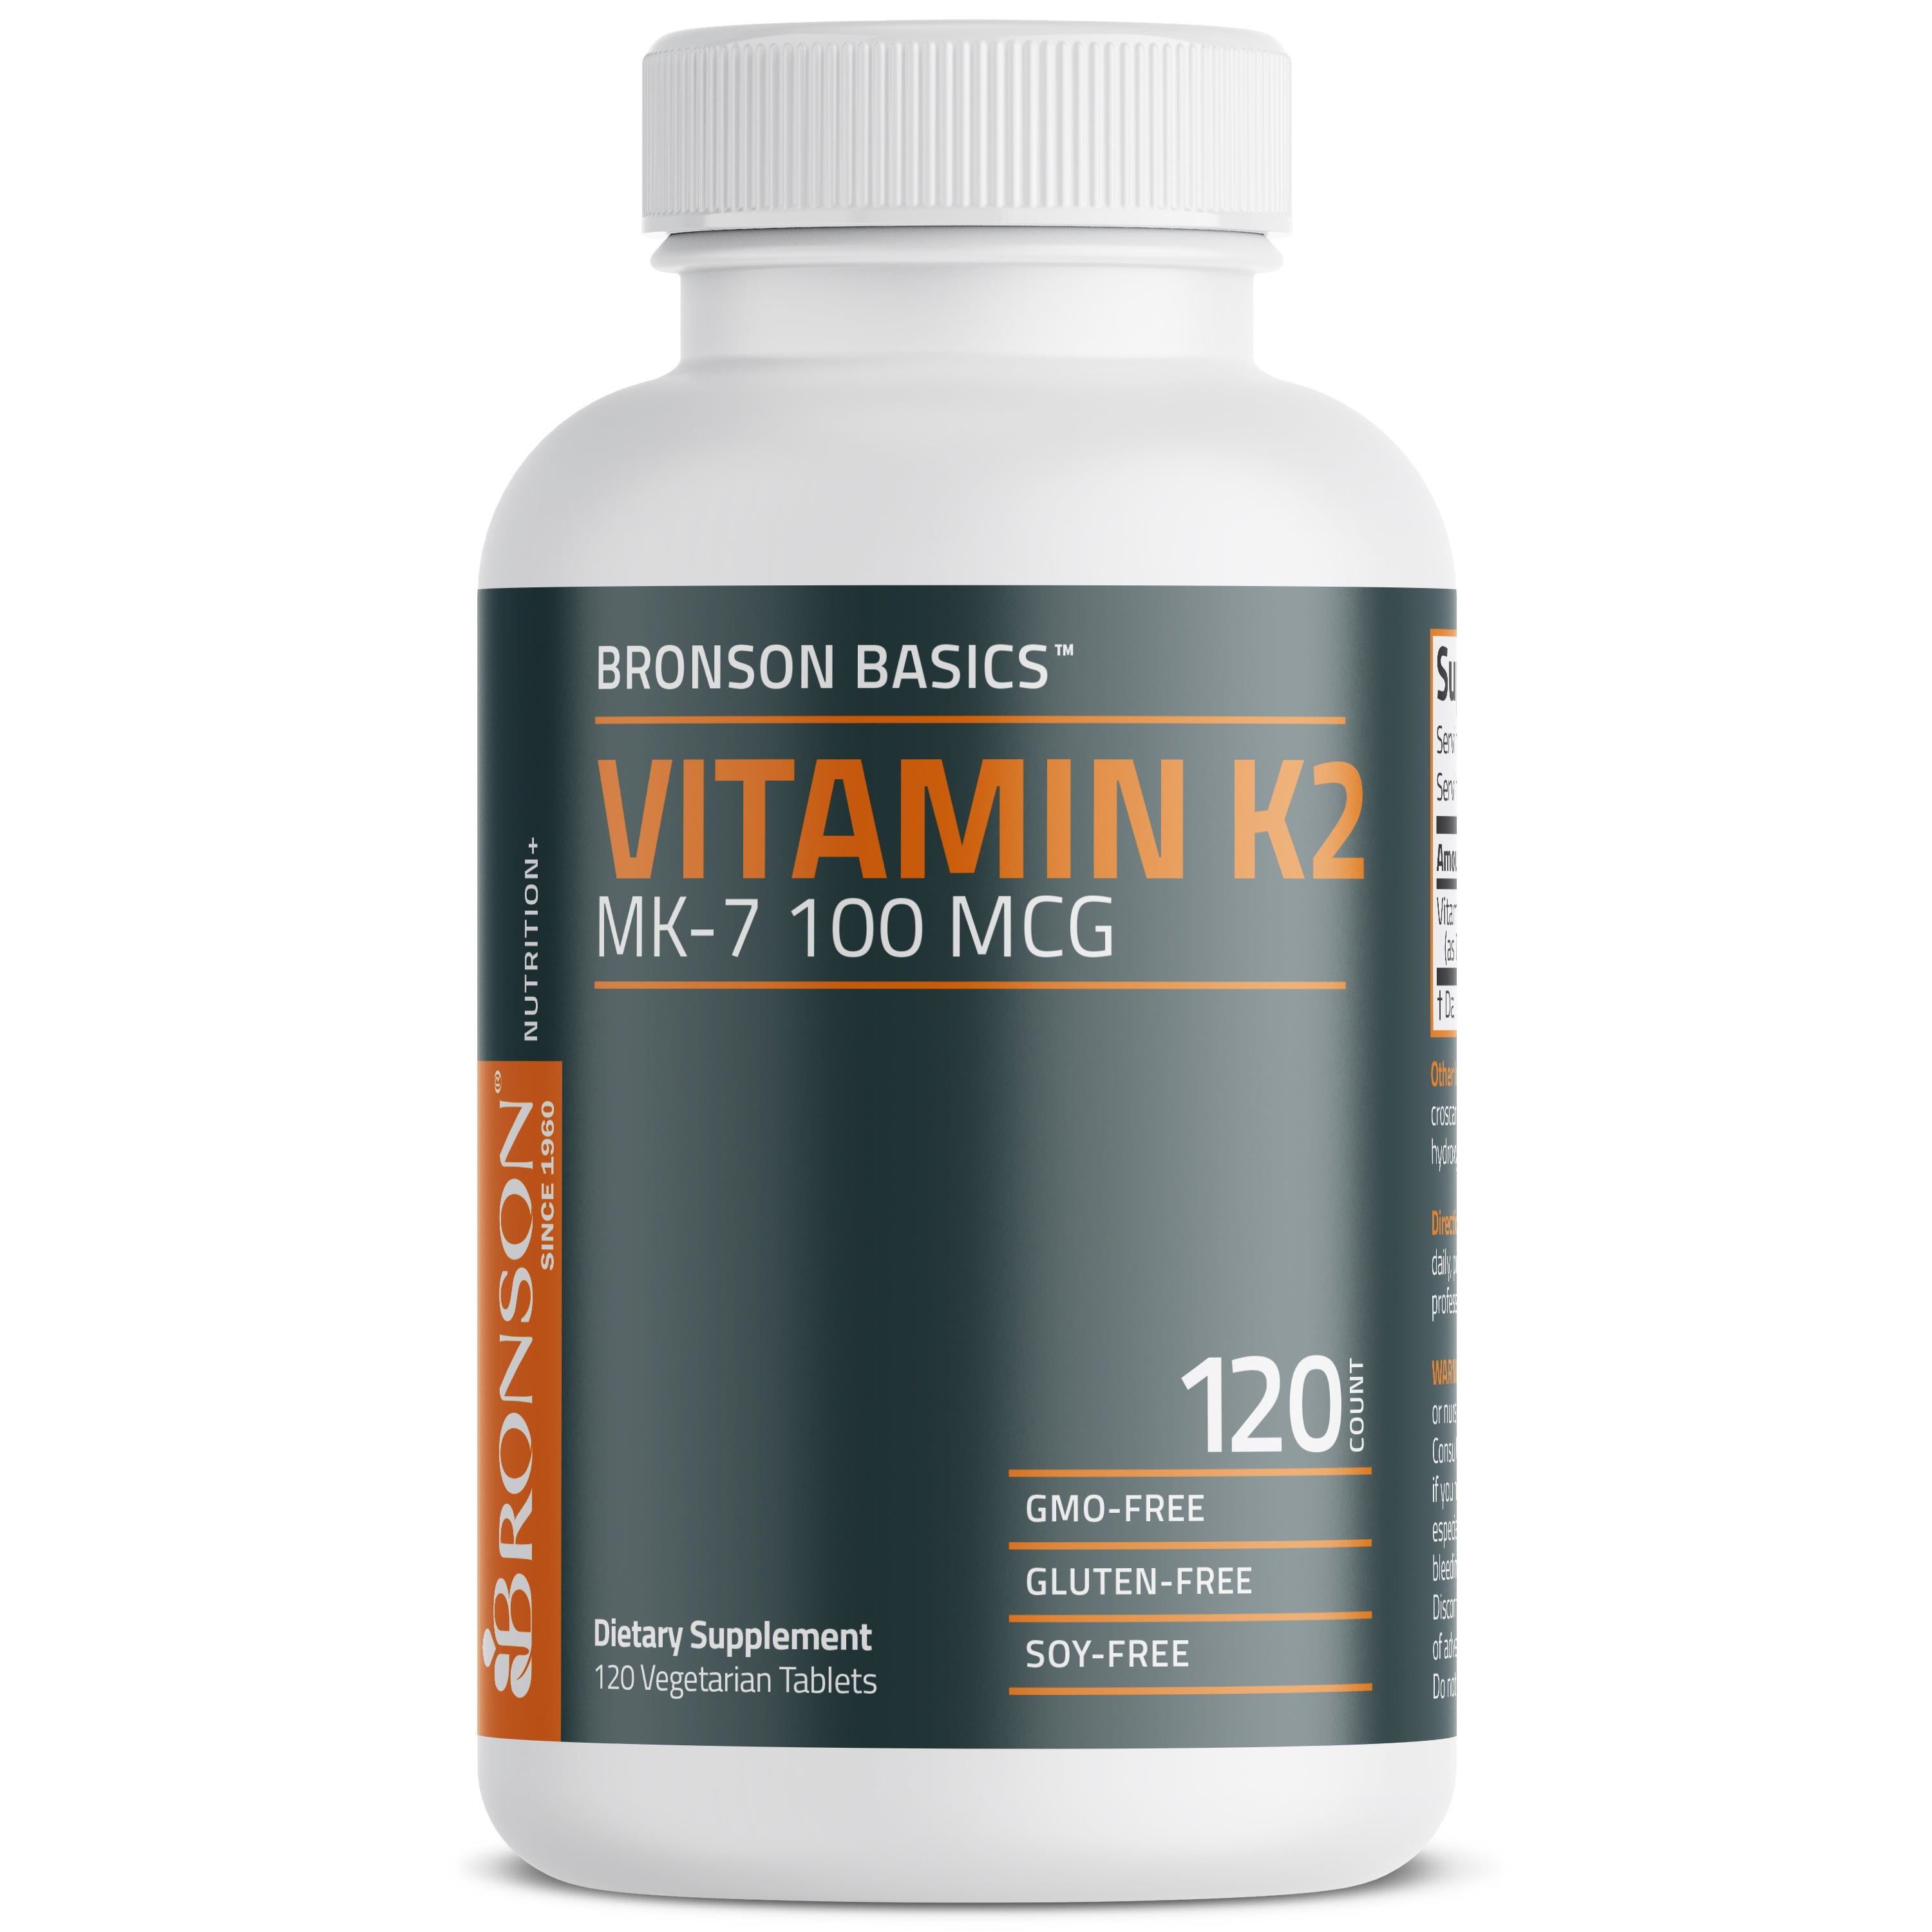 Vitamin K2 MK-7 100 MCG view 4 of 6